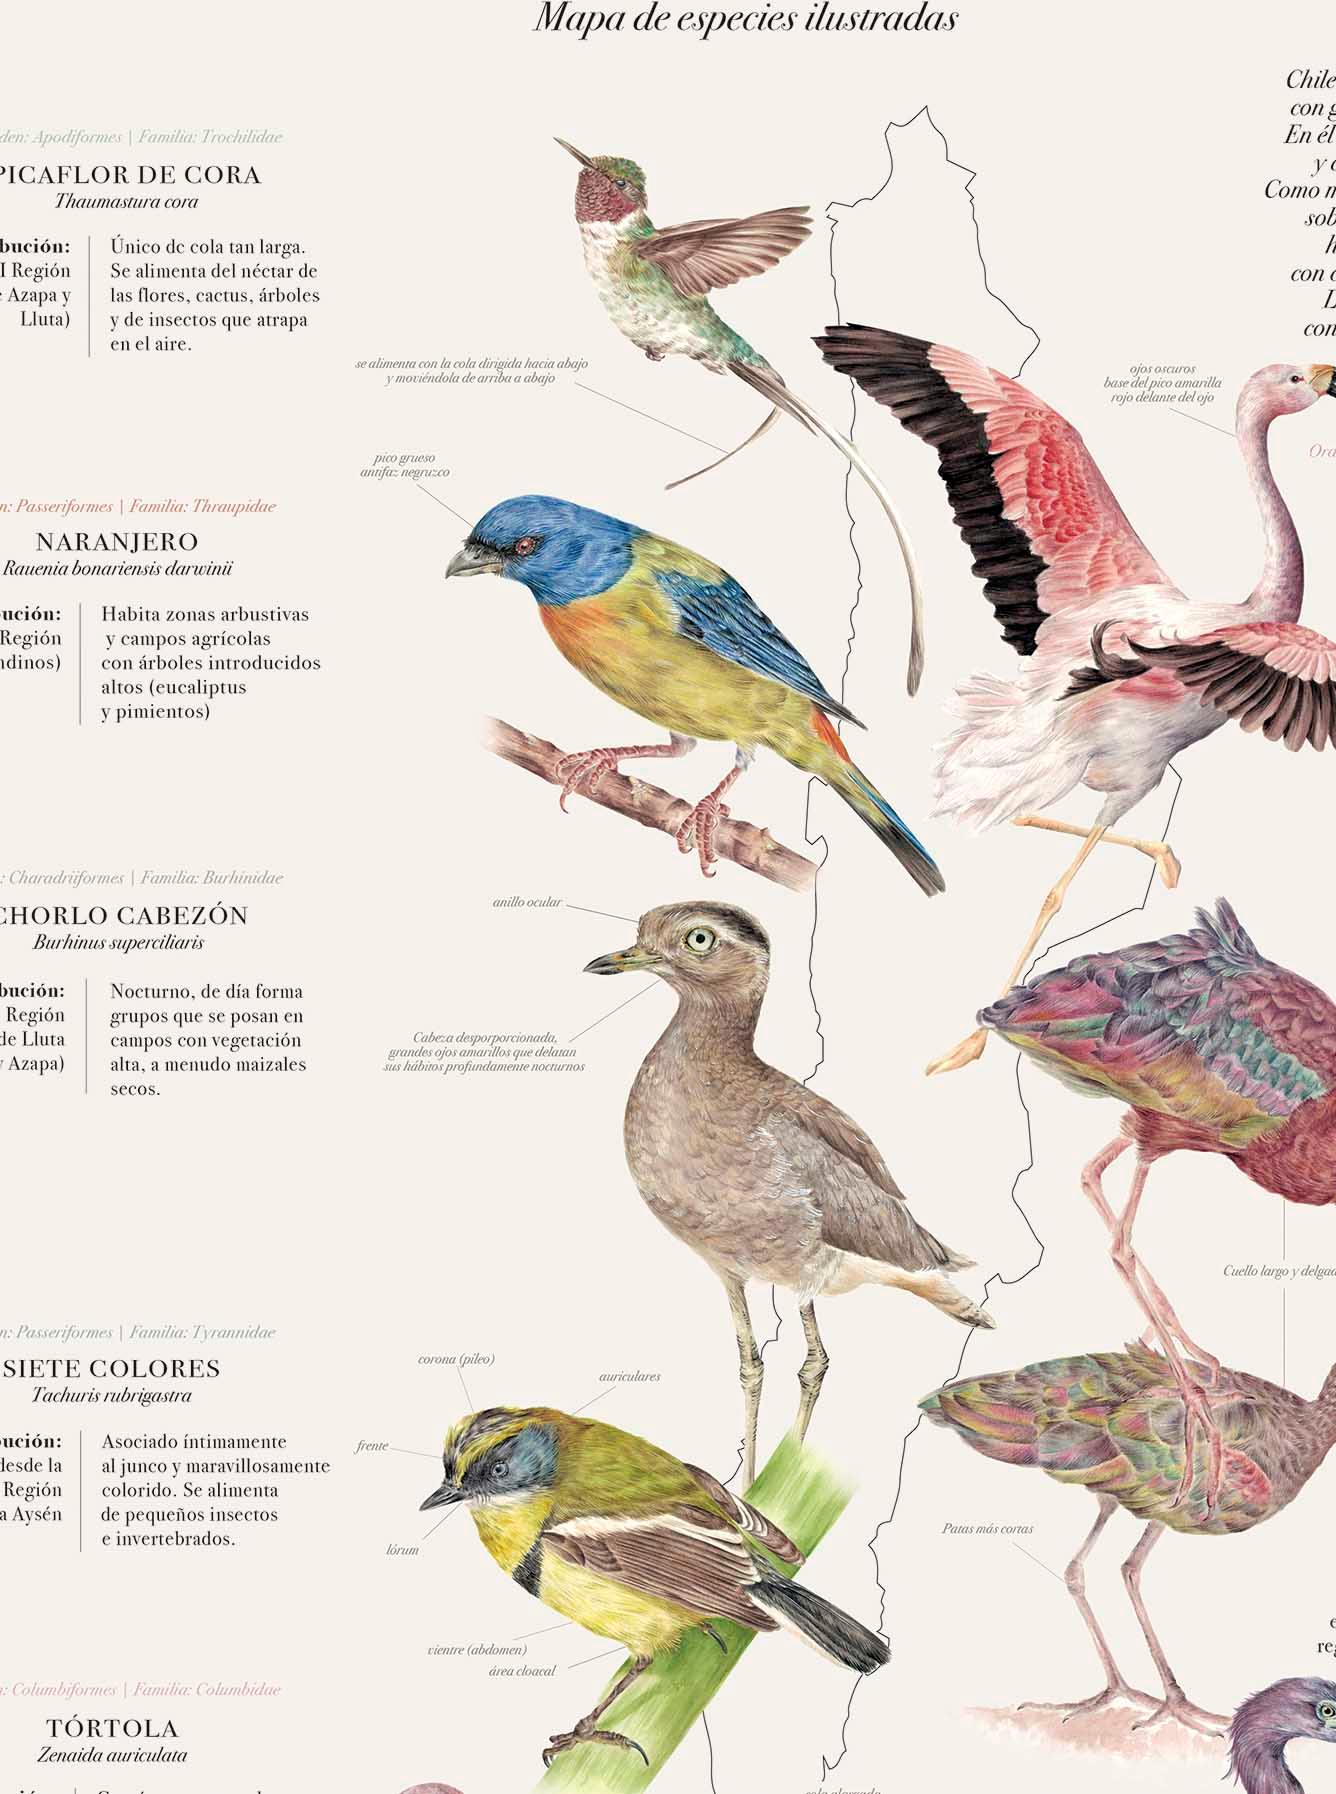 Aves de Chile Plumíferos Fantásticos - Lámina - Mappin